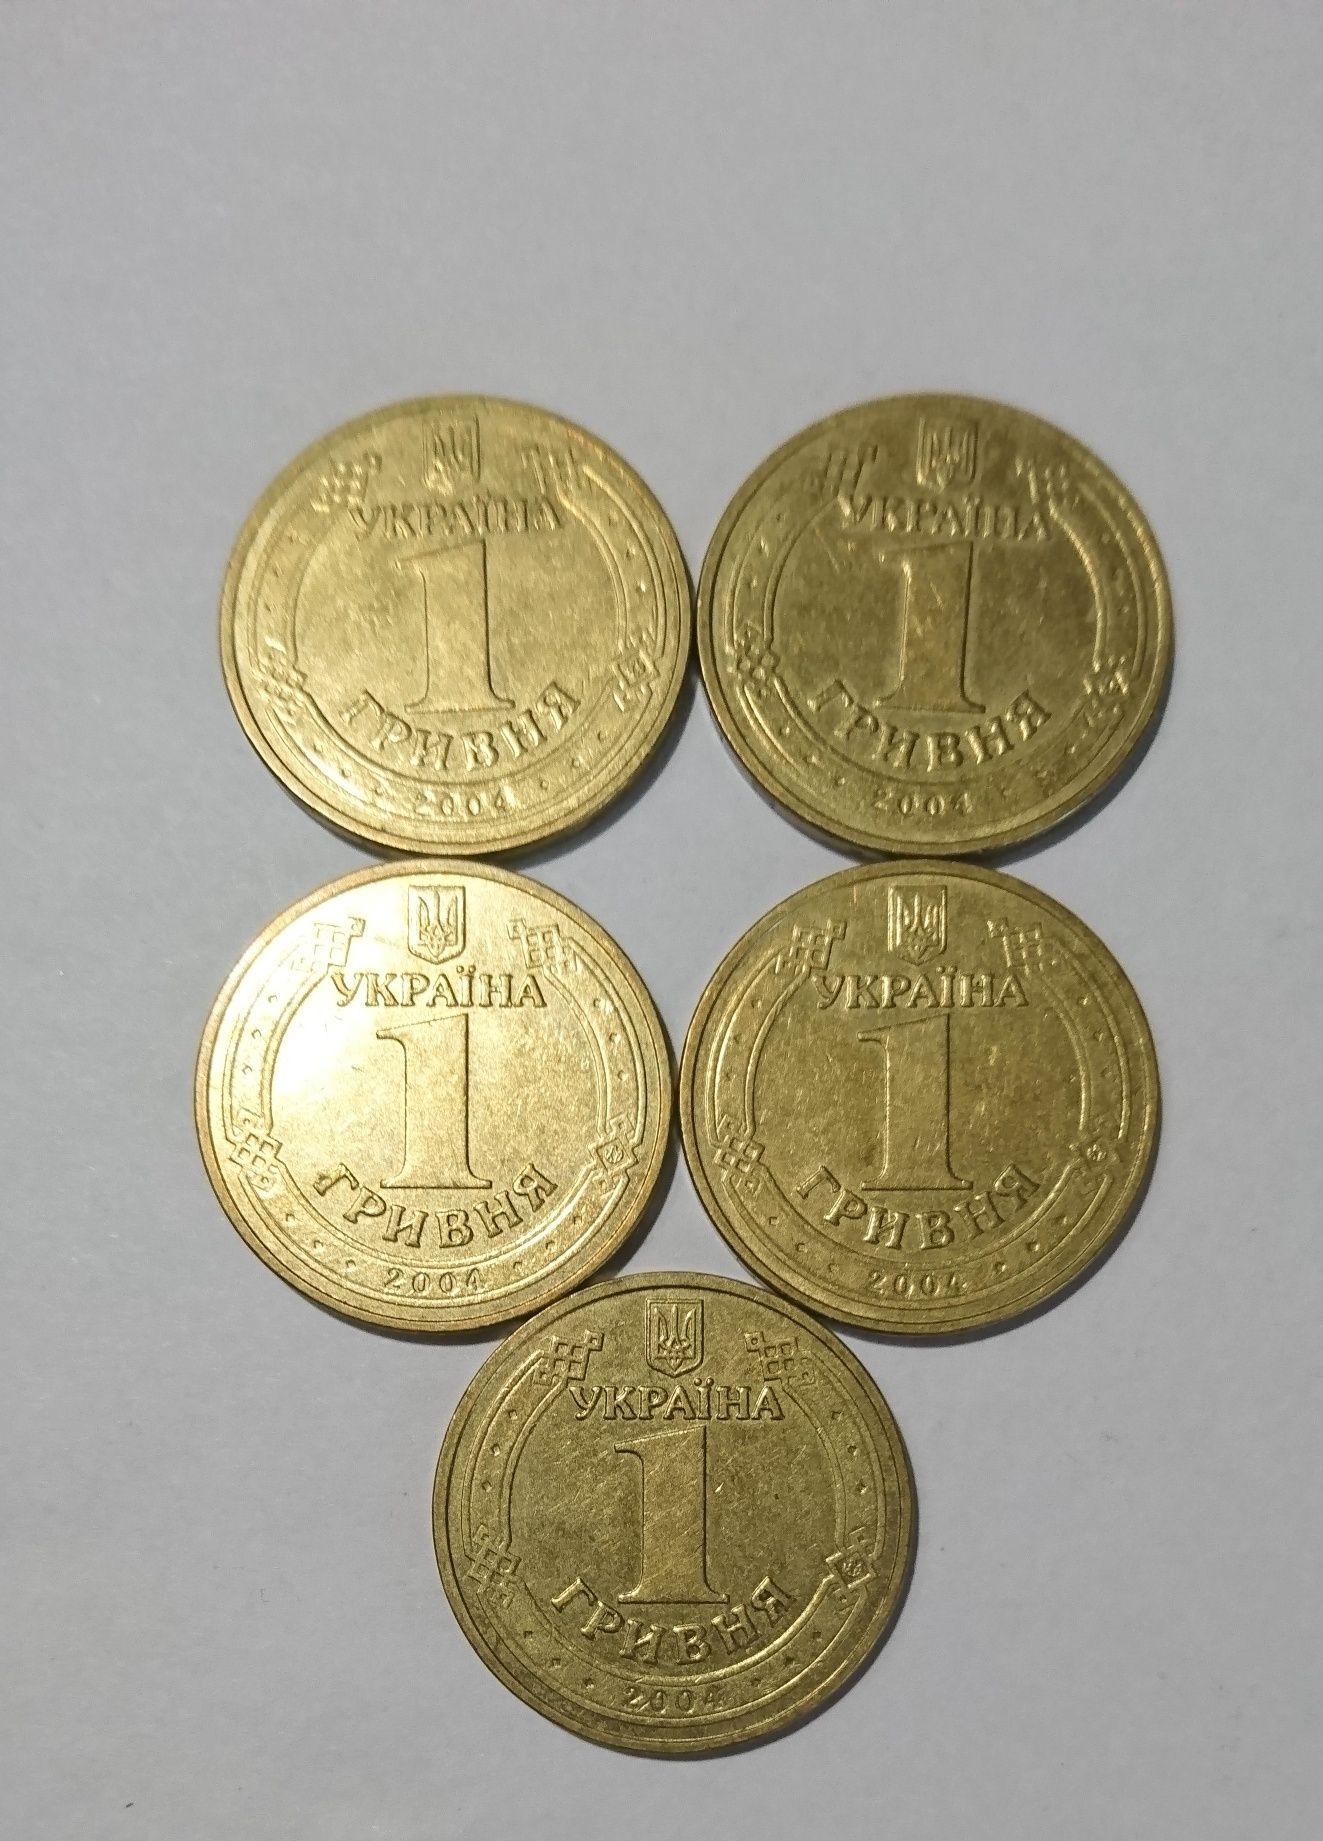 Монеты 1 гривна, 50коп, 25 коп, 10 коп, 2 коп, 1 коп 2001-2014гг выпус